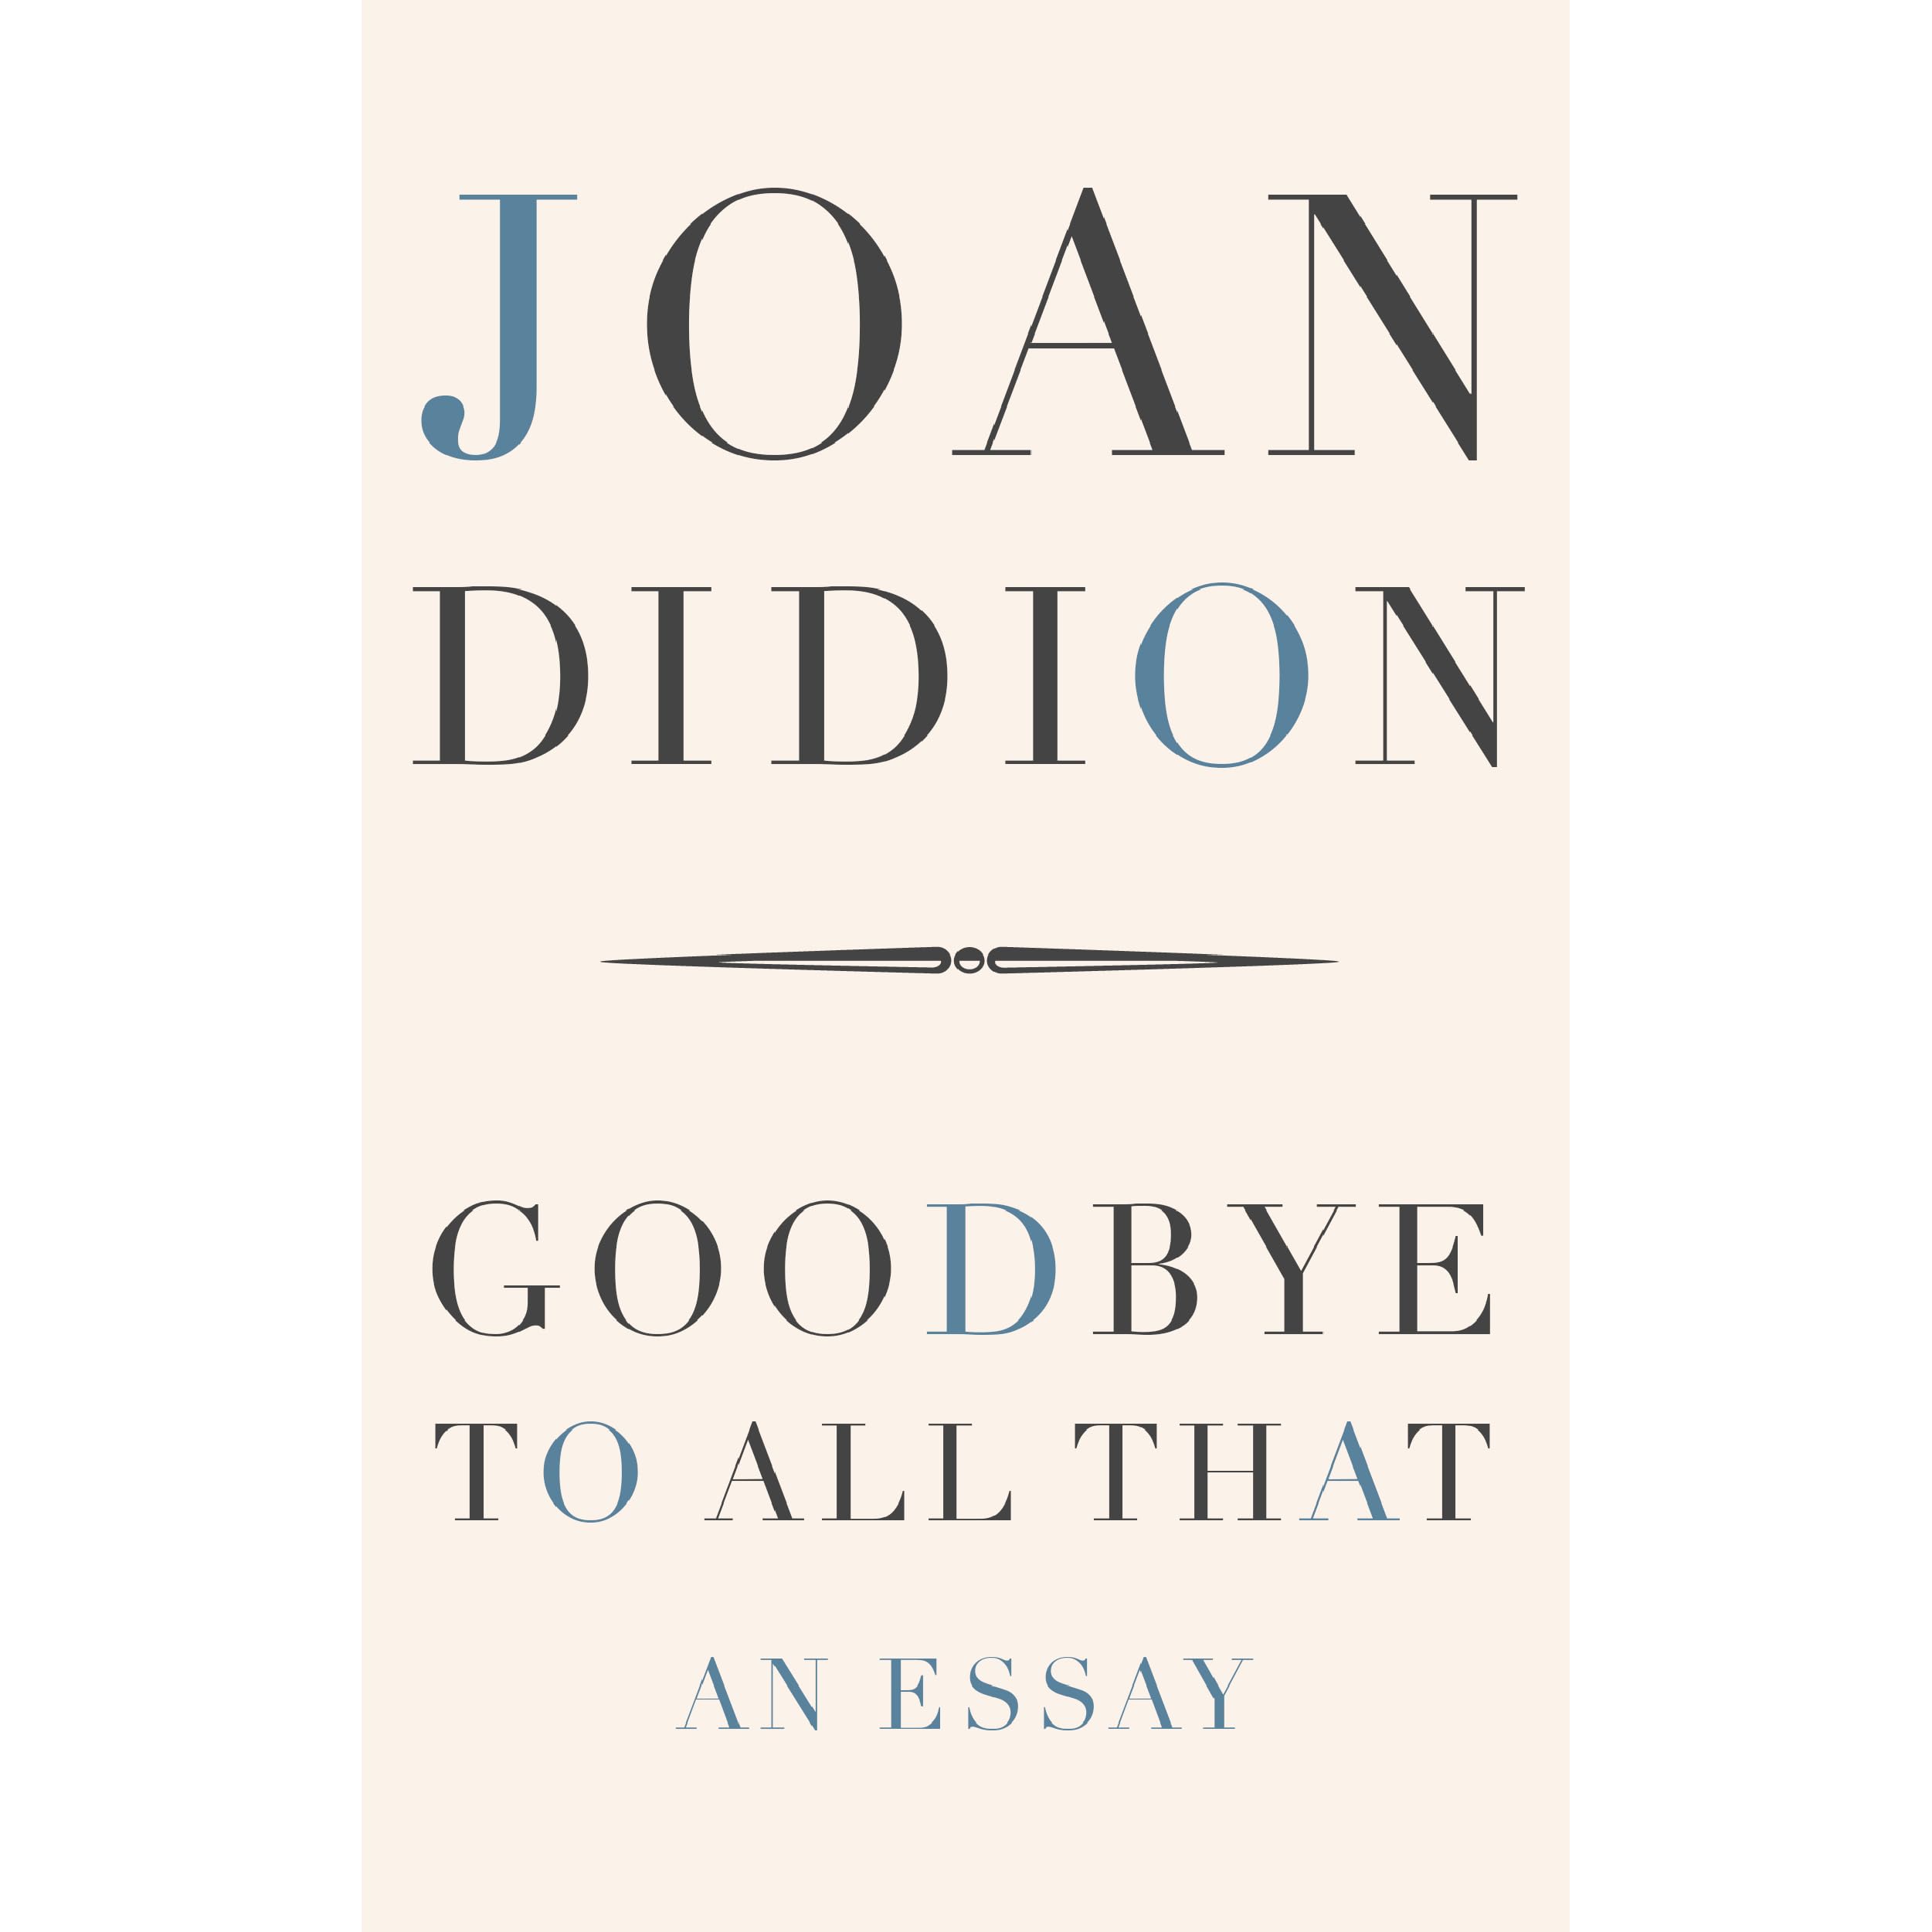 Joan didion essays